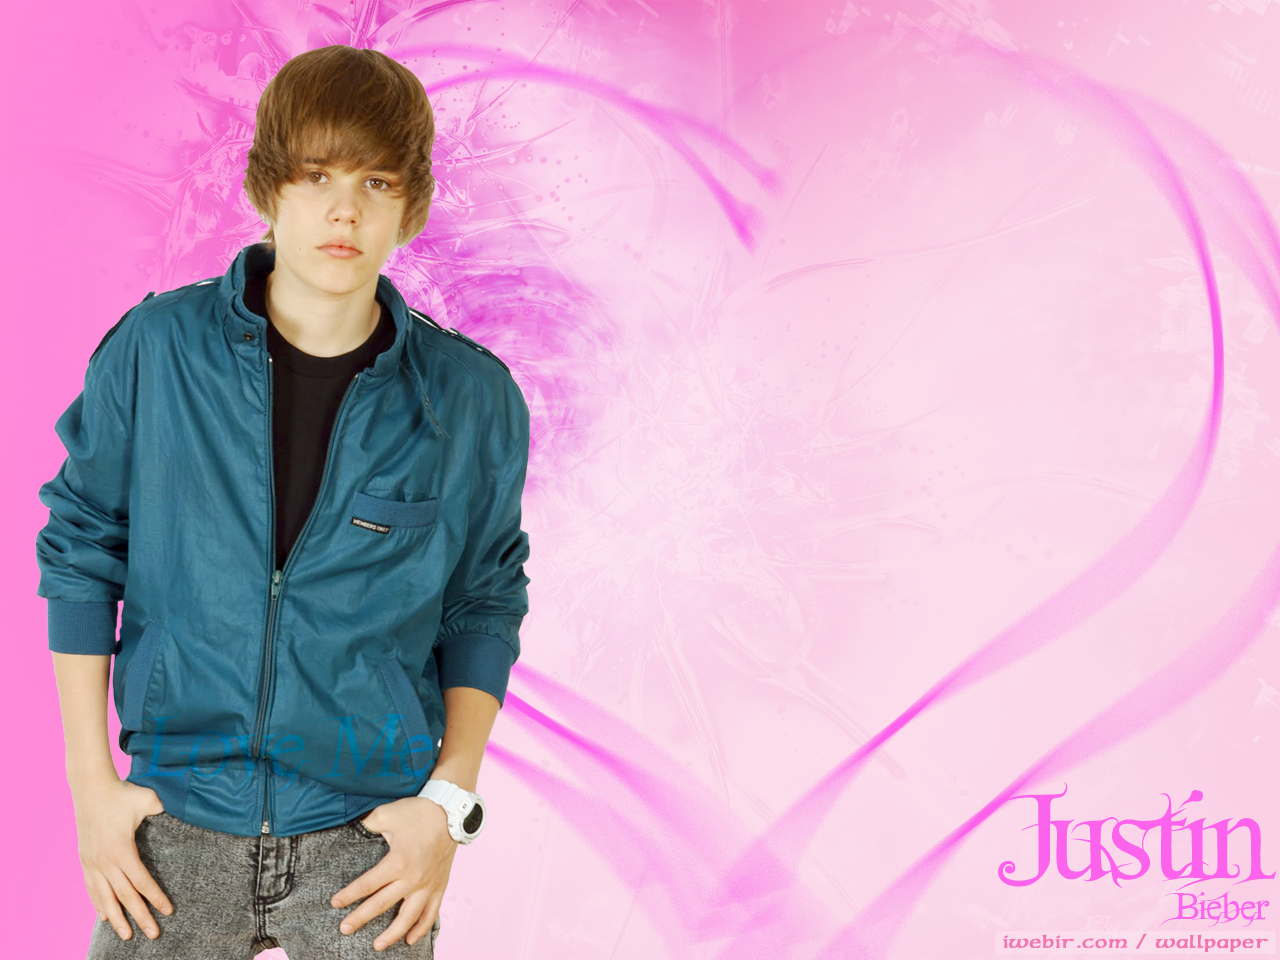 Justin Bieber images justin bieber 2010 hot wallpapers wallpaper